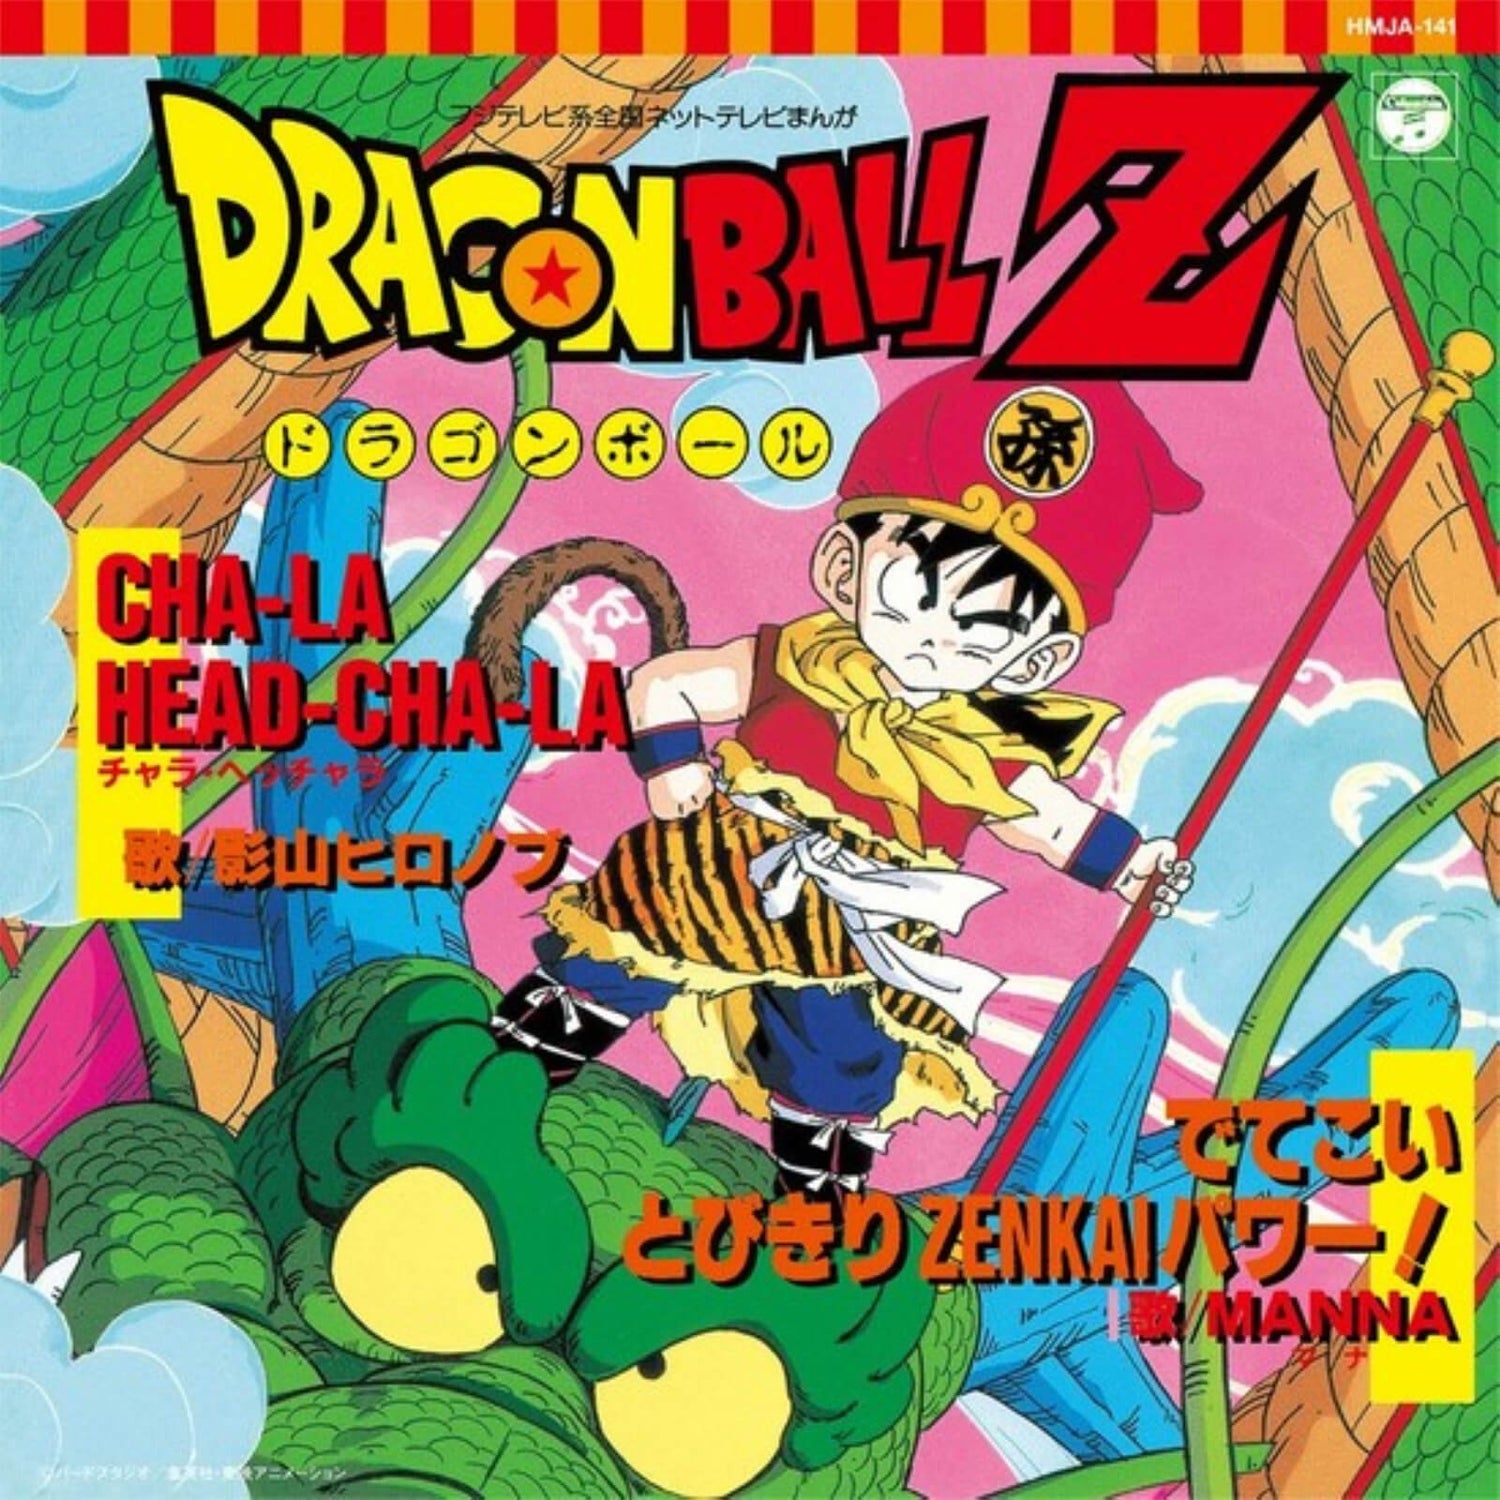 Dragon Ball Z - CHA-LA HEAD-CHA-LA schwarz-weiß Detekoi Tobikiri ZENKAI Power! 18 cm